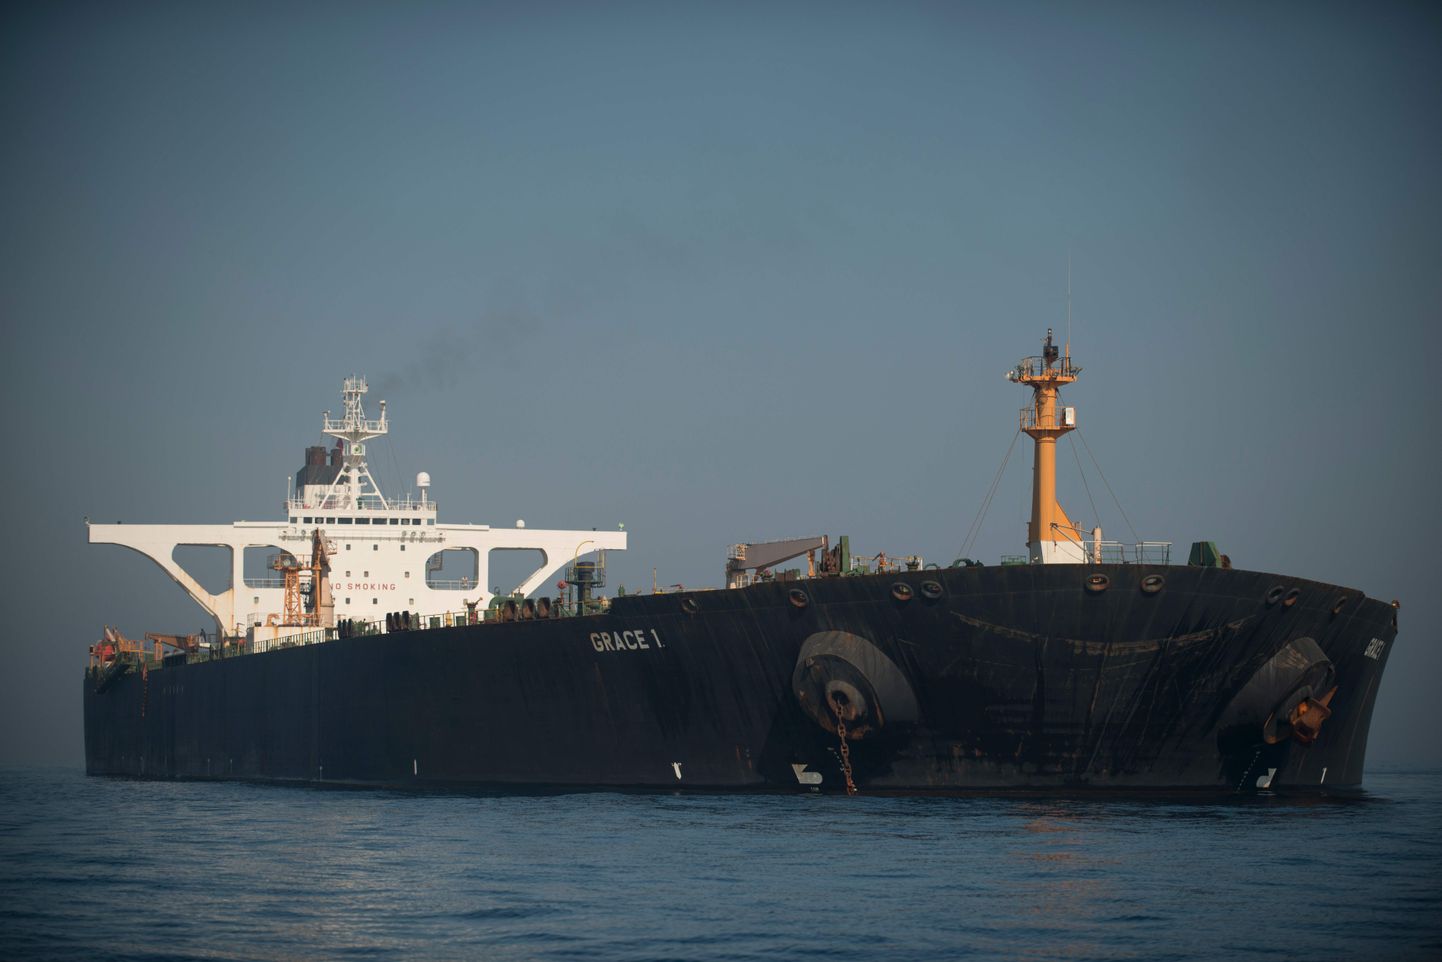 Iraani supertanker Grace 1 Gibraltari rannikul 15. augustil.